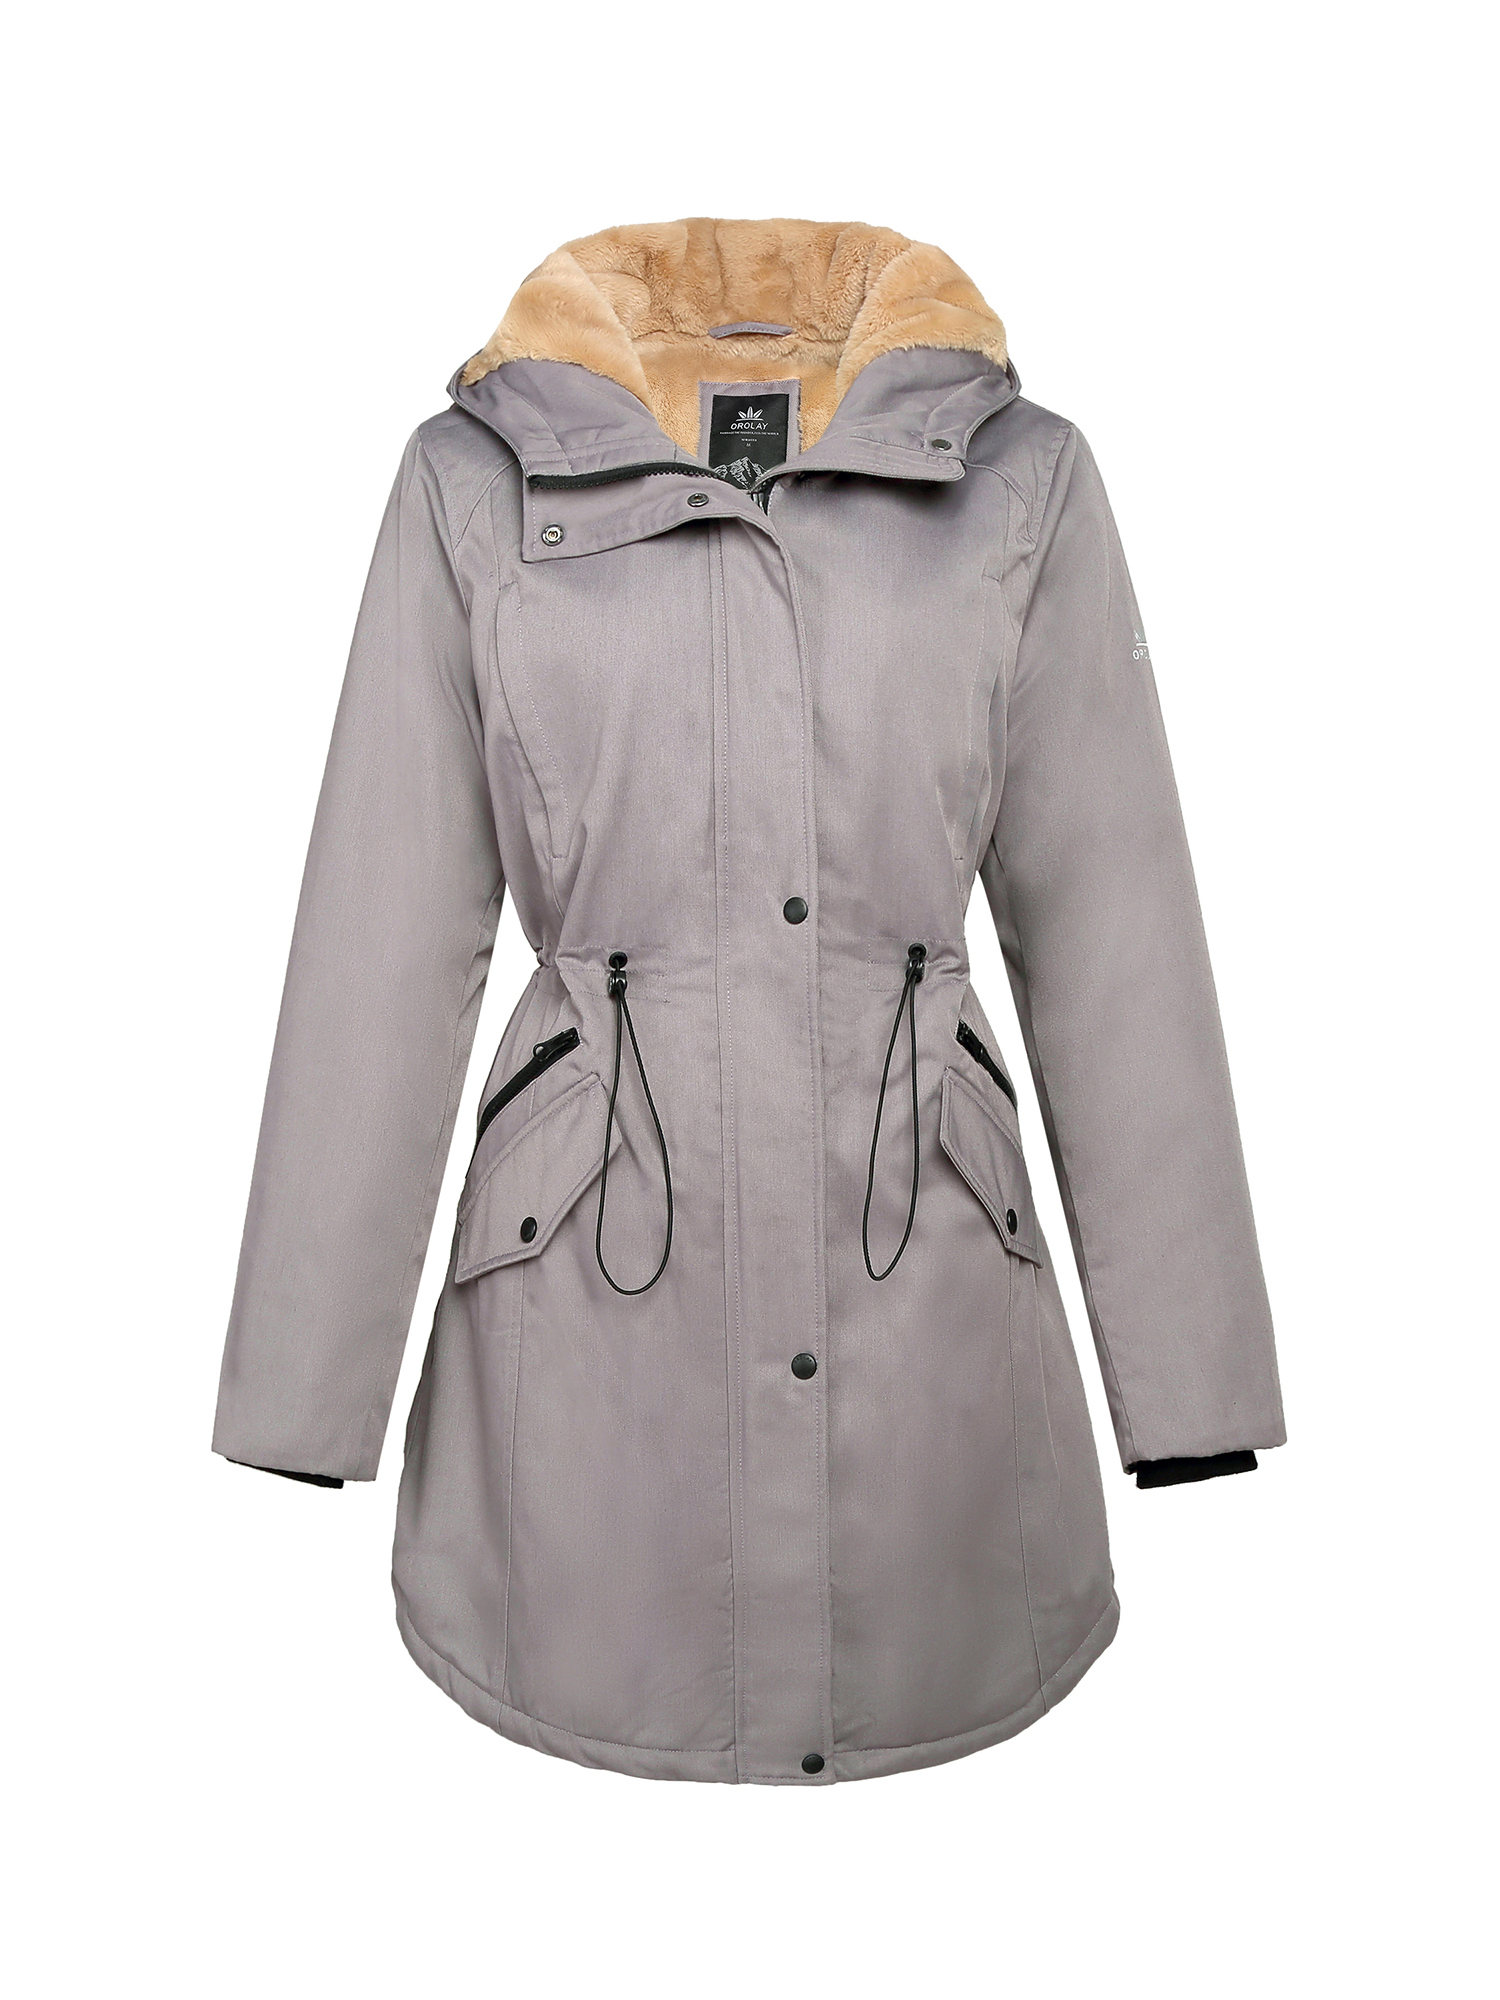 Orolay Women's Winter Parka Fleece Parka Warm Winter Coat Hoodie Jacket Mid length Winter Jacket Grey XS - image 1 of 5